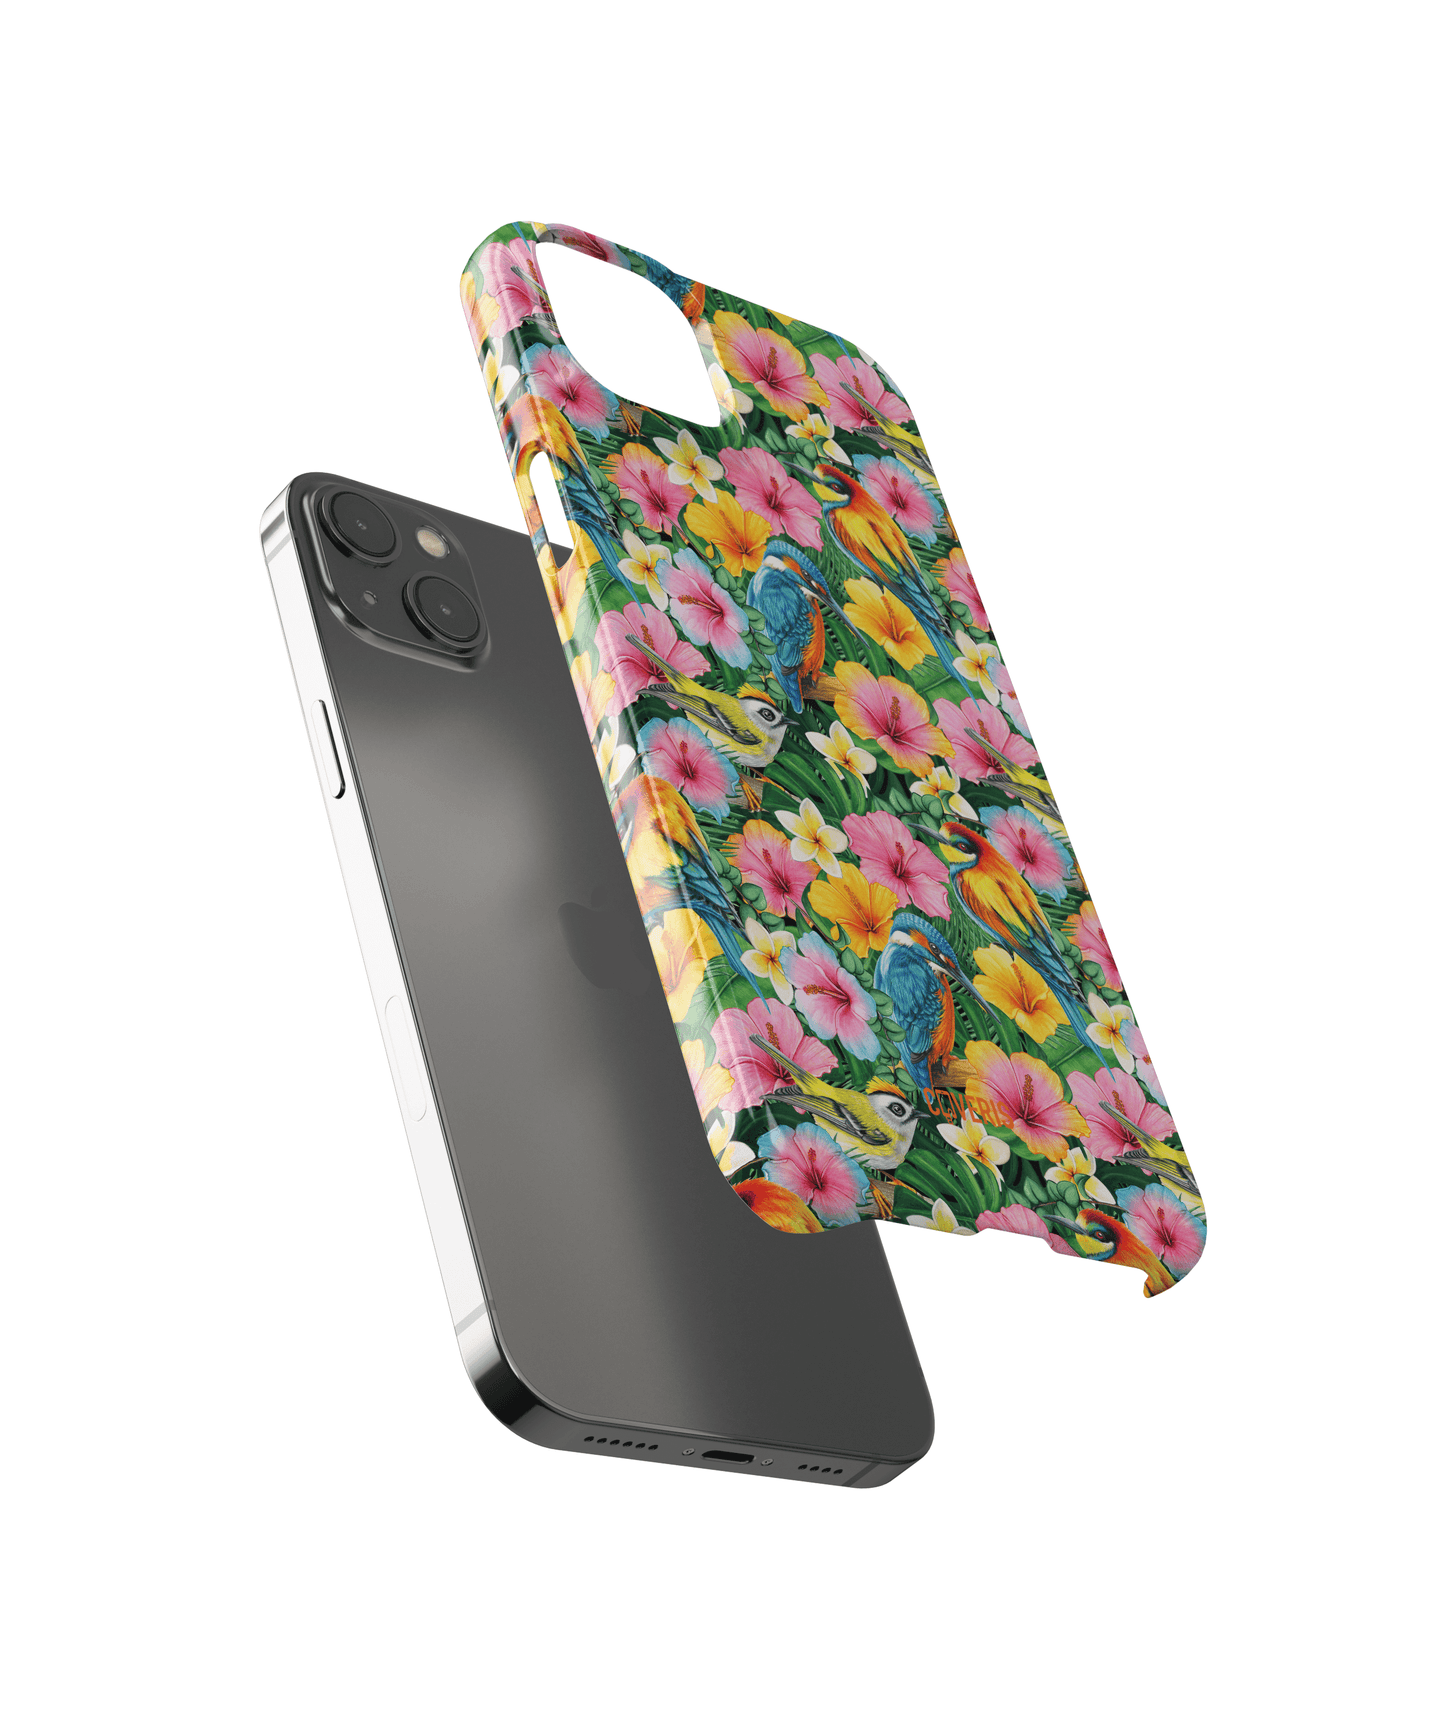 Islander - Google Pixel 4 XL phone case